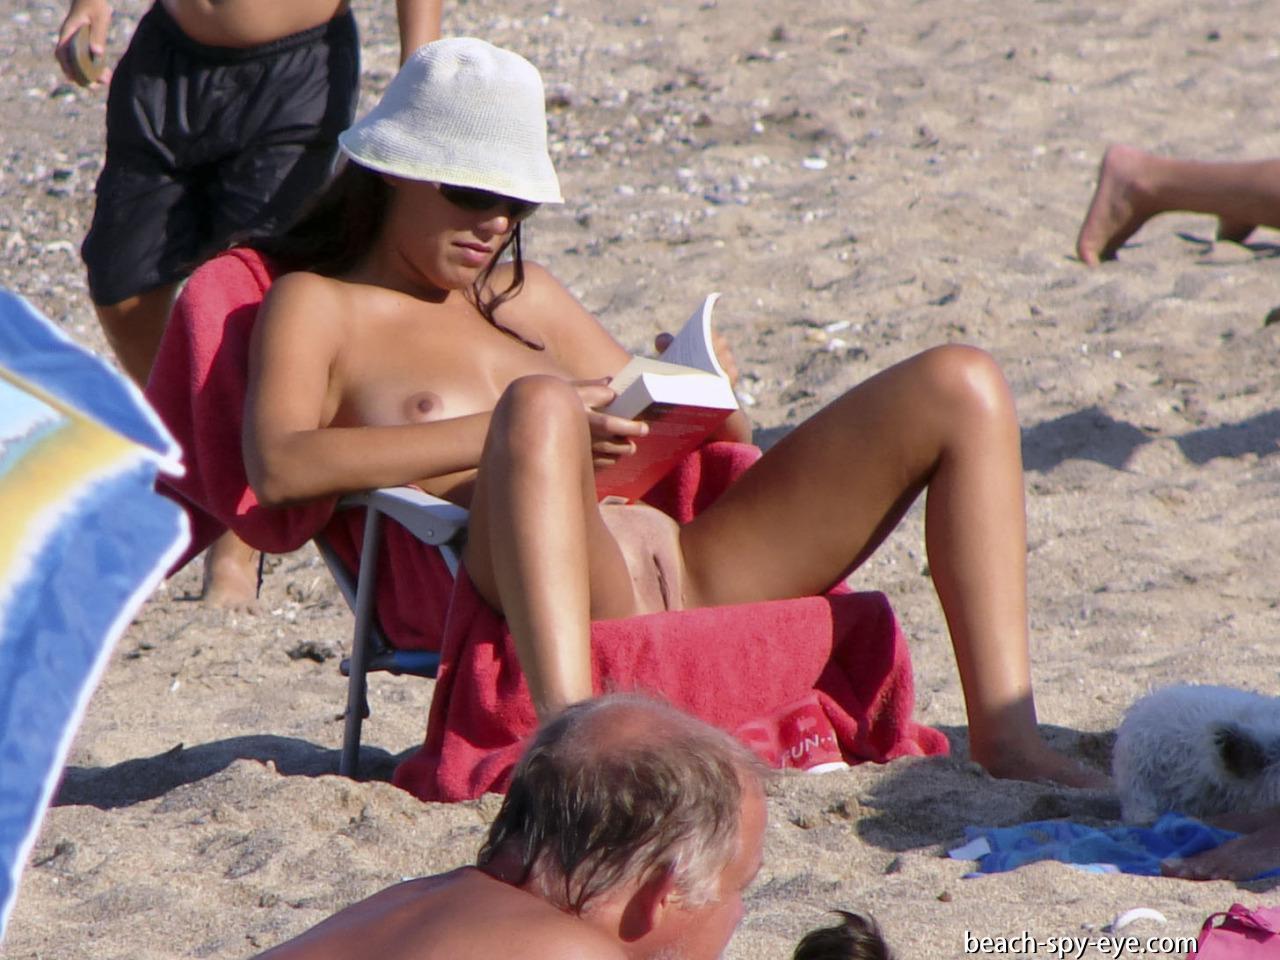 beach spread legs : pussy tan-lines, beach voyeur and nudist girls nude beach women, naked on beach..